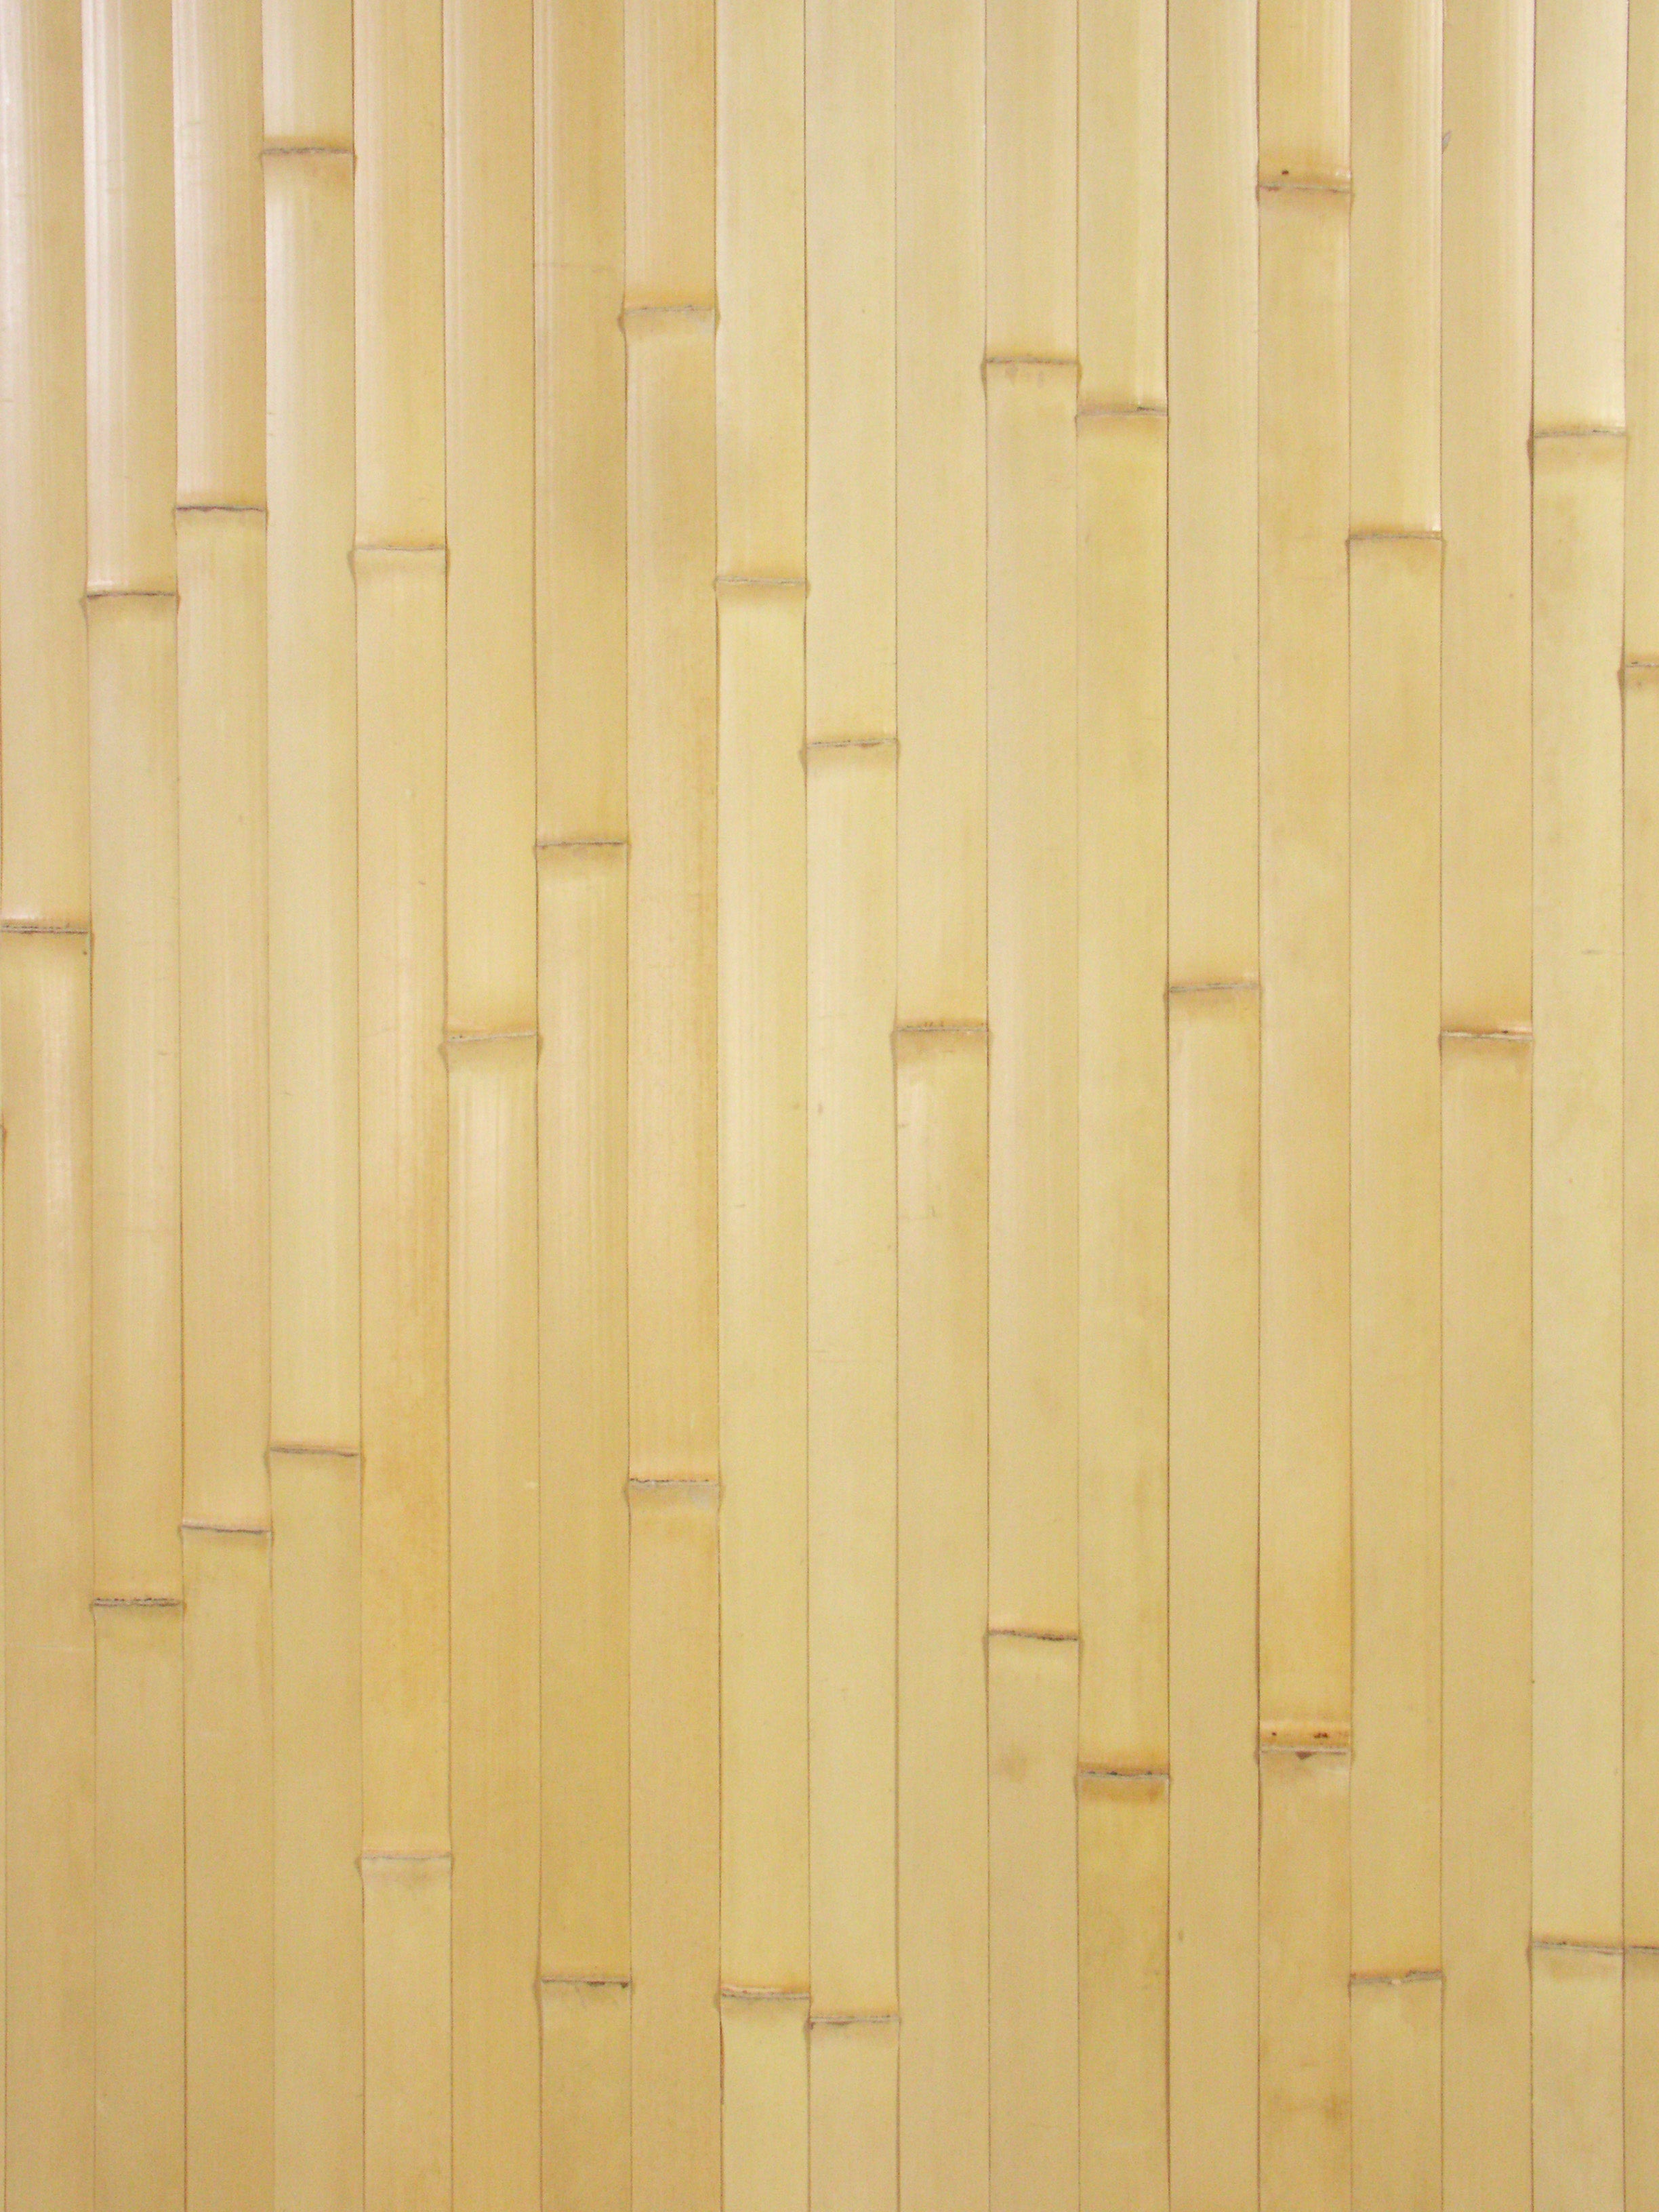 Flameproof bamboo [bleached bamboo] Horizontal bamboo 3x6 board